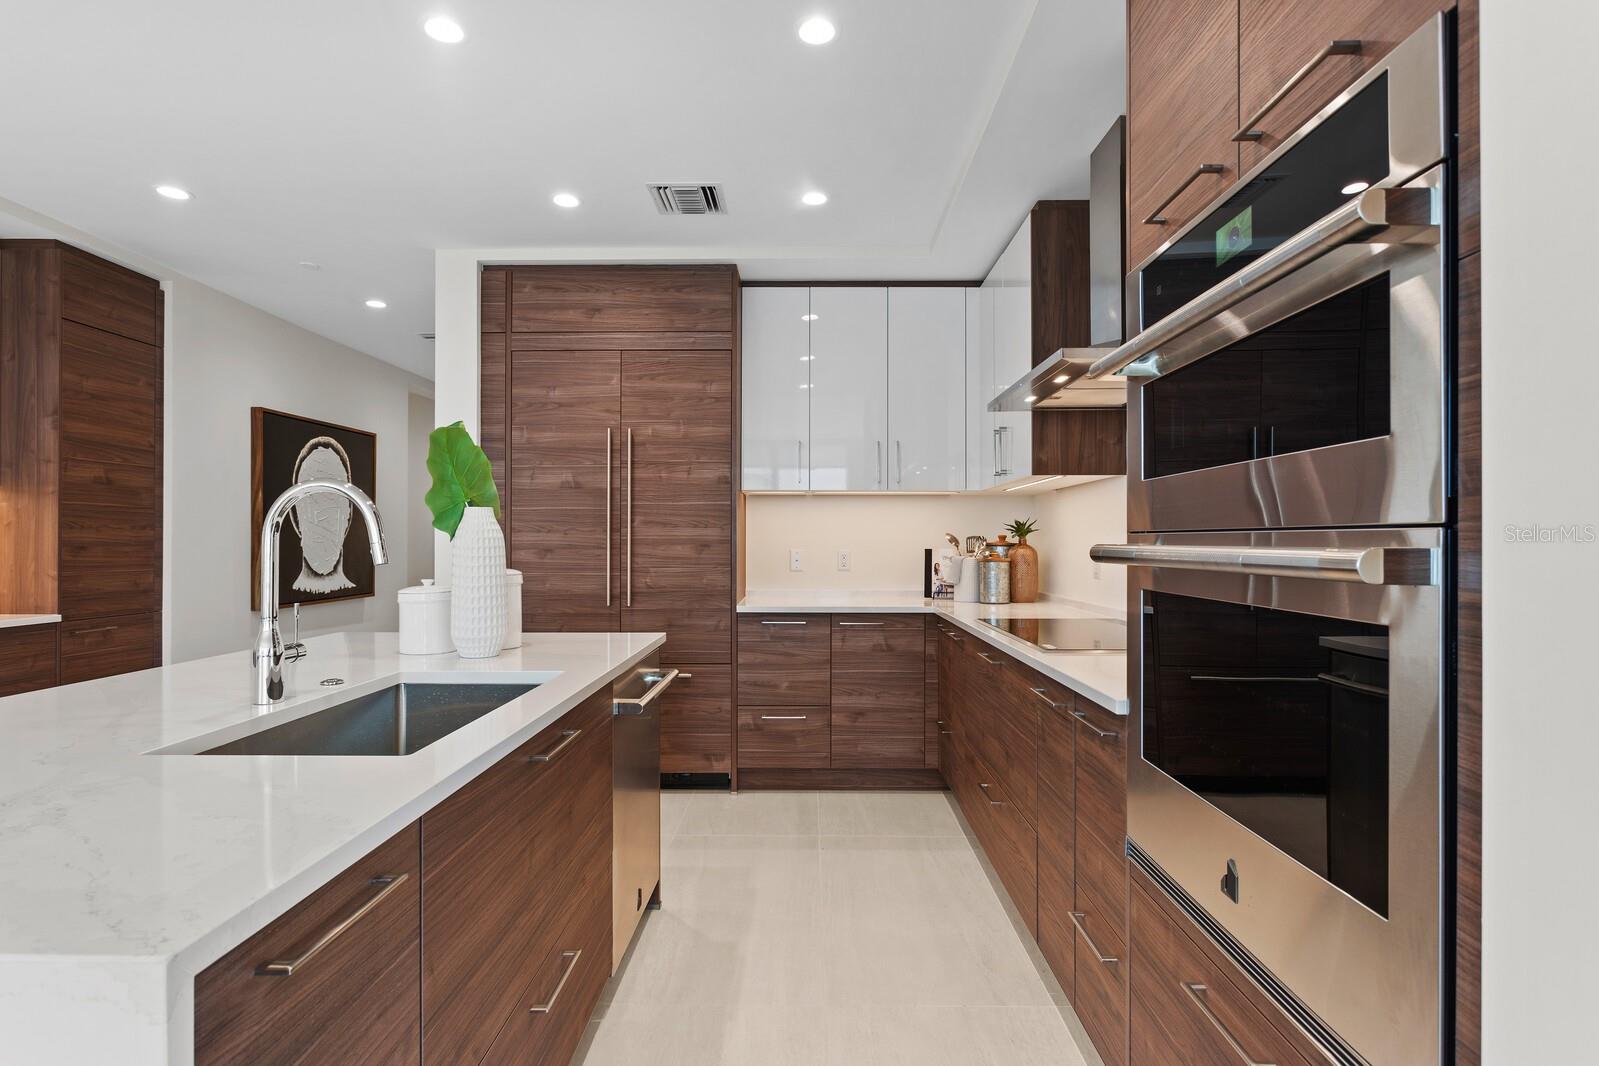 Stunning kitchen with adjacent bar and additional storage